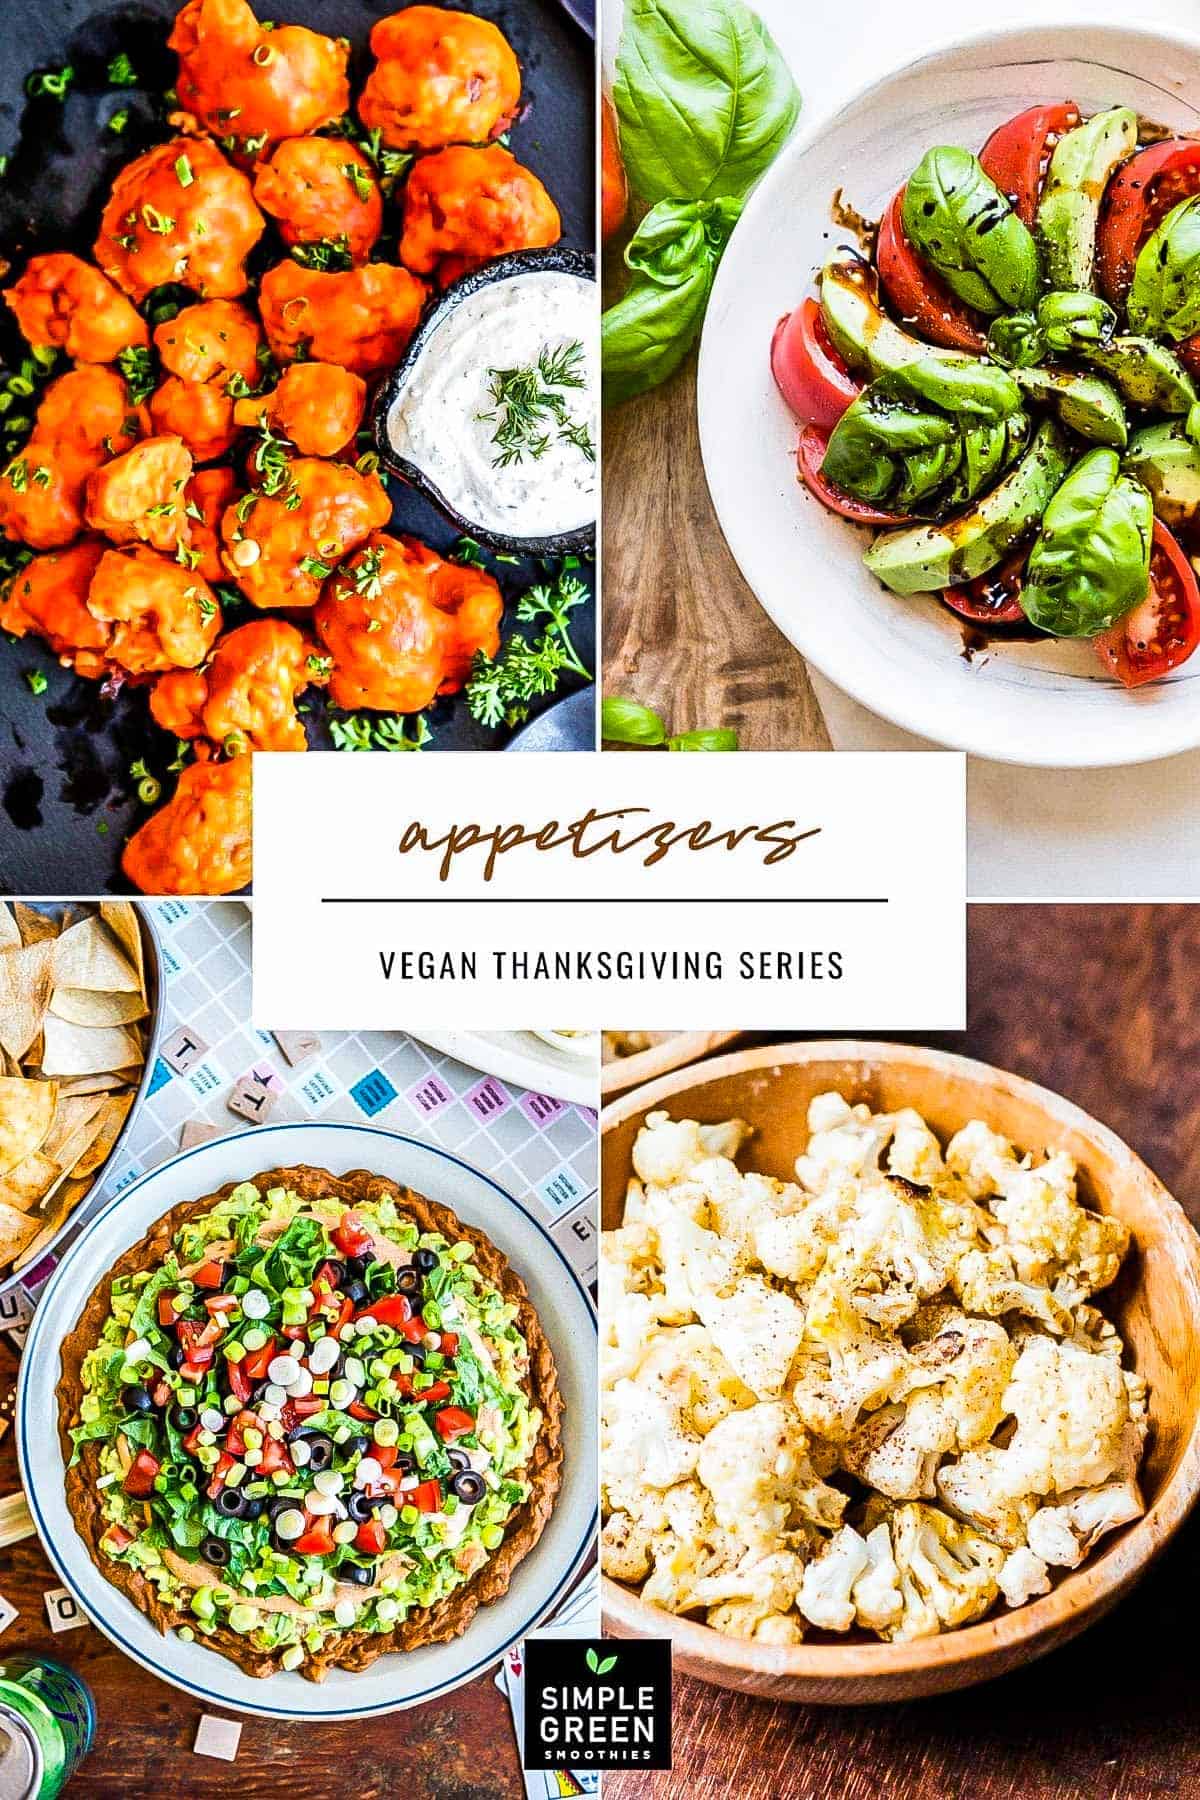 allstar appetizers for vegan thanksgiving recipes 2021